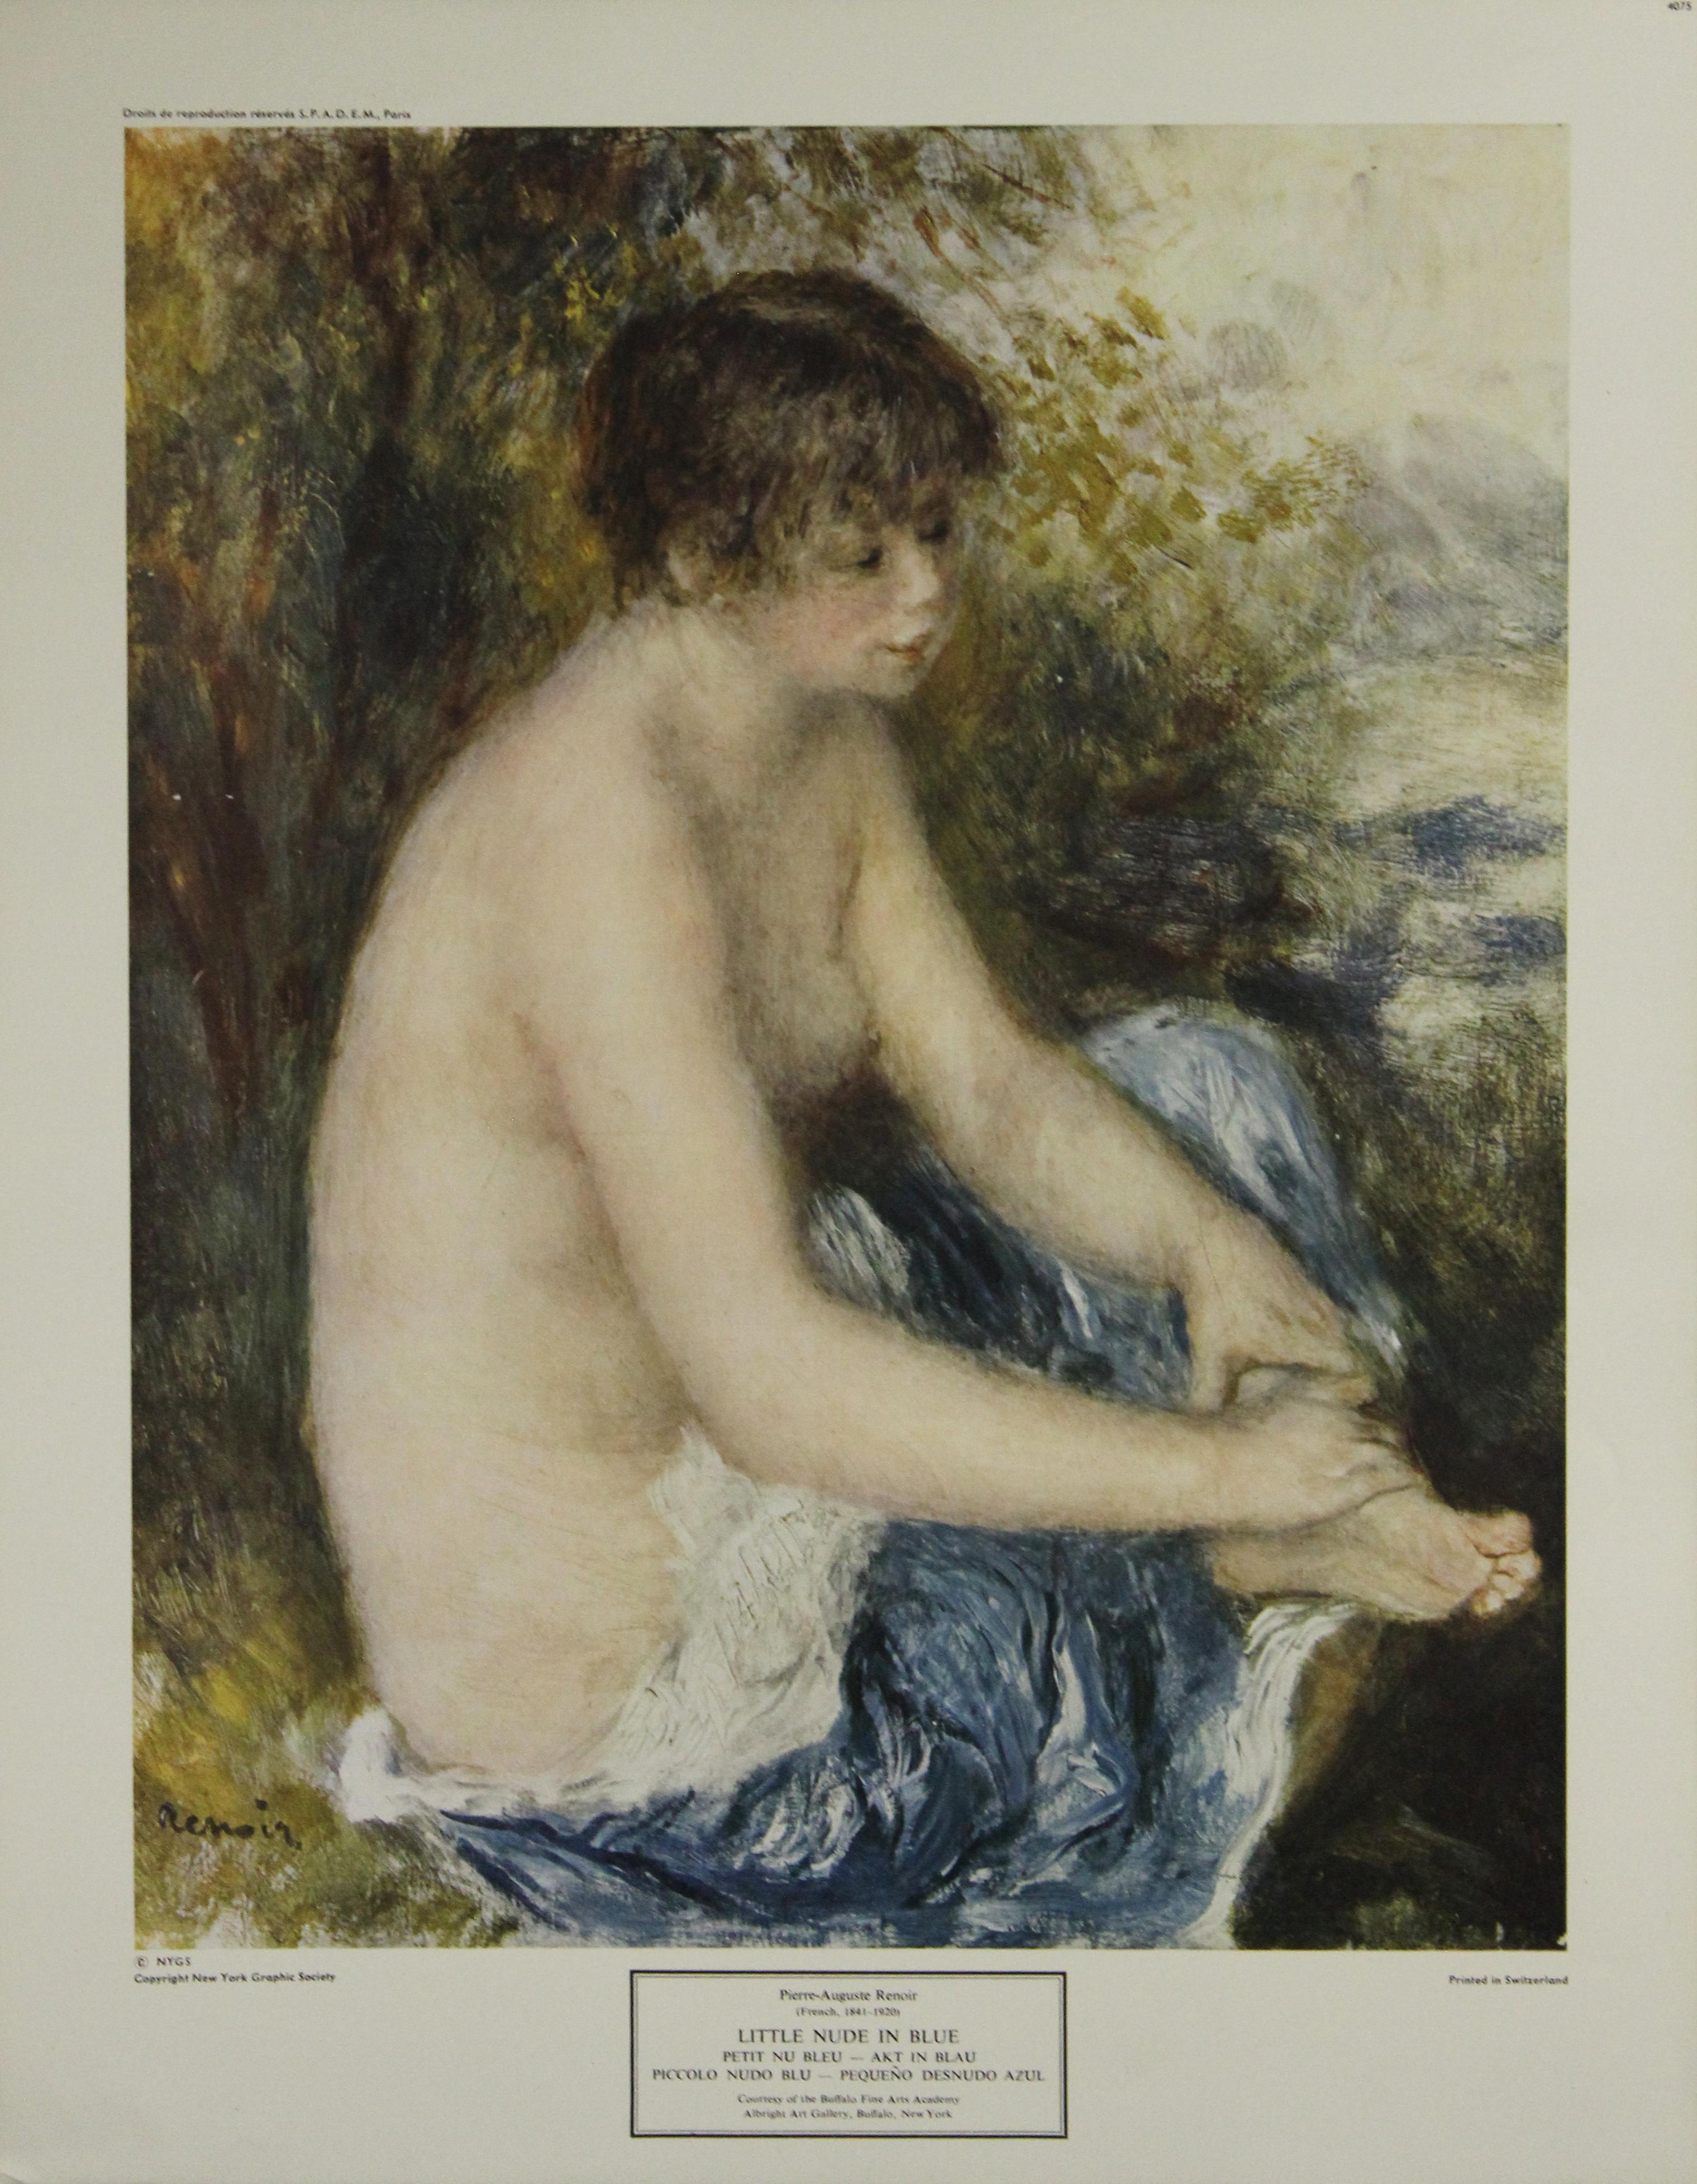 Pierre-Auguste Renoir Portrait Print - Little Nude in Blue-Poster. New York Graphic Society. Printed in Switzerland. 